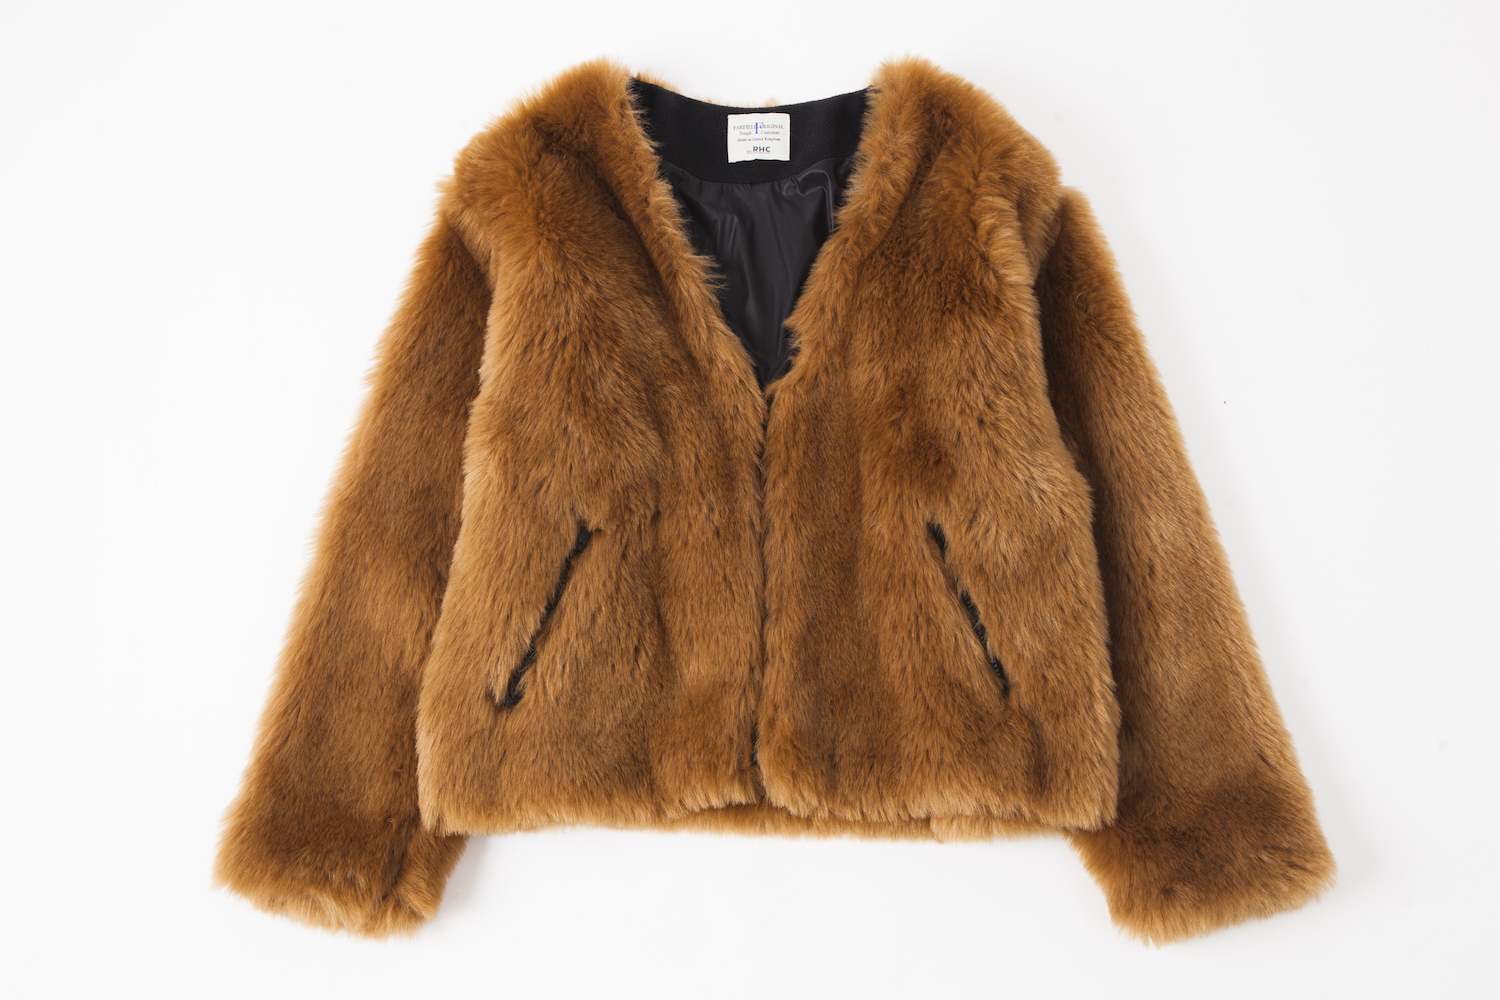 FARFIELD for RHC
Fur Vest&Jacket